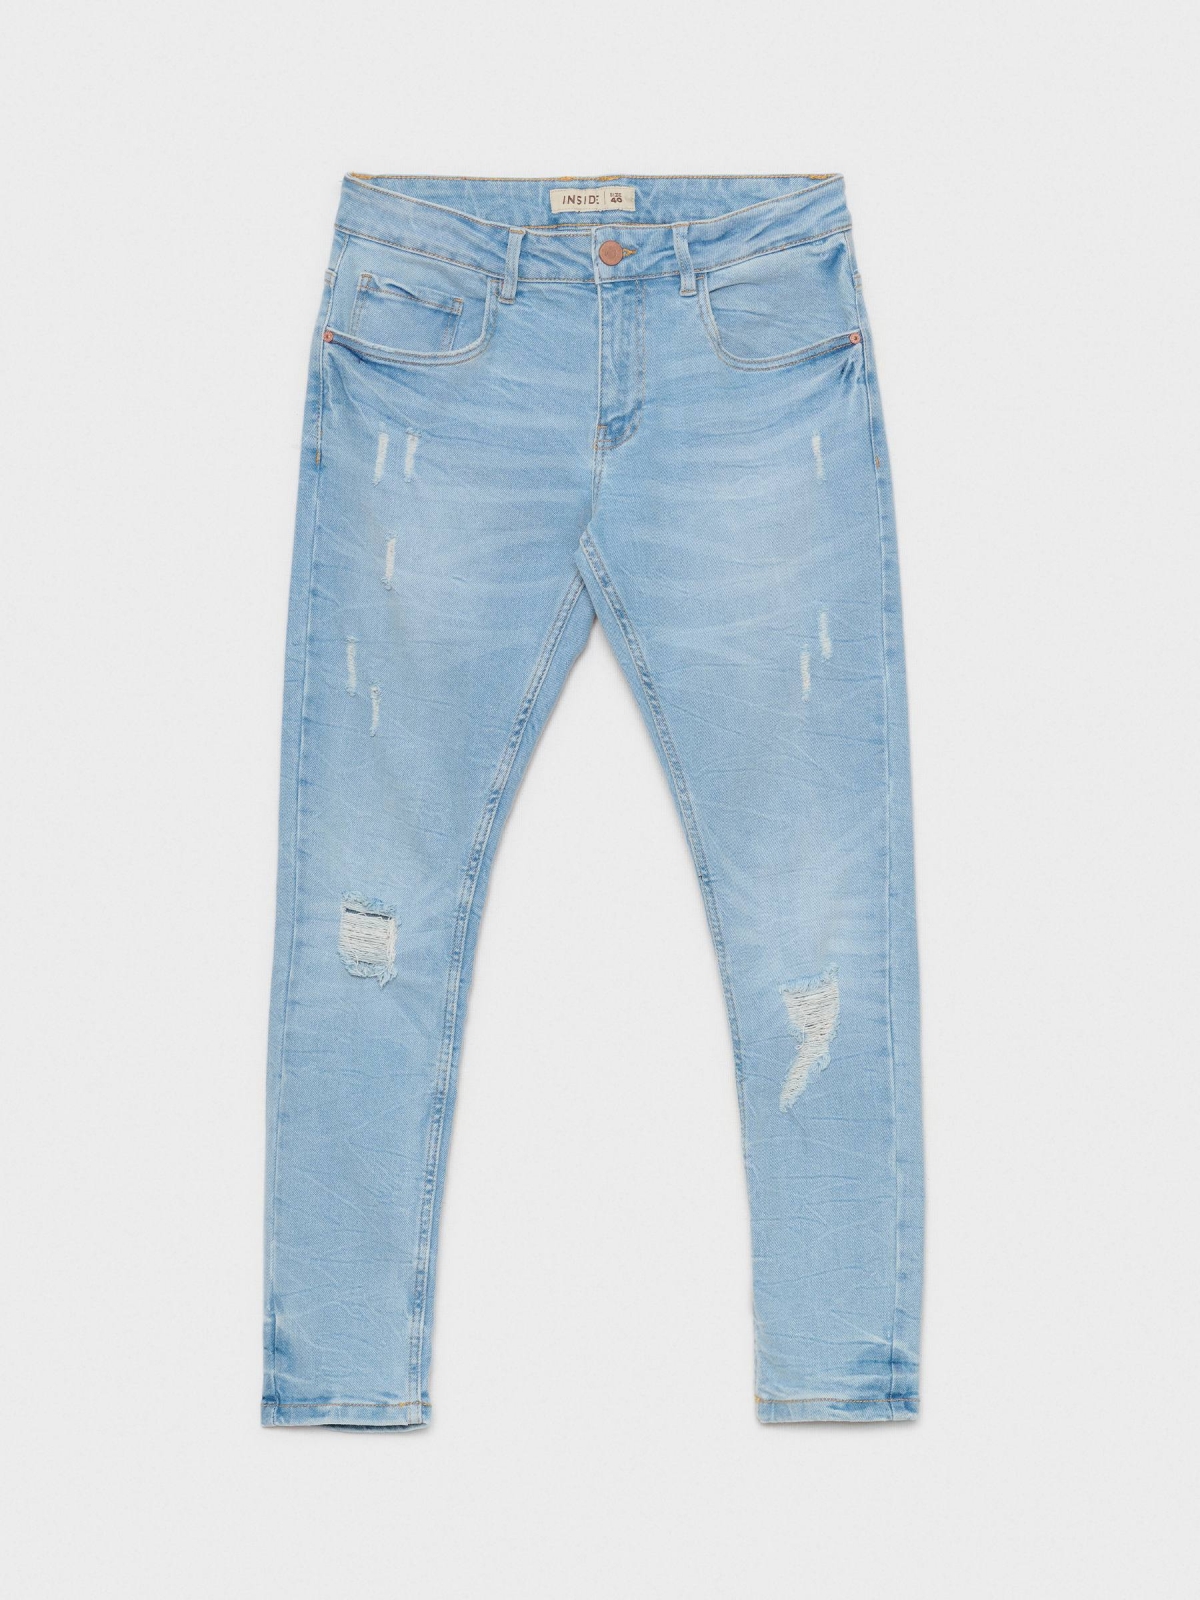  Jeans super slim lavado rotos azul claro